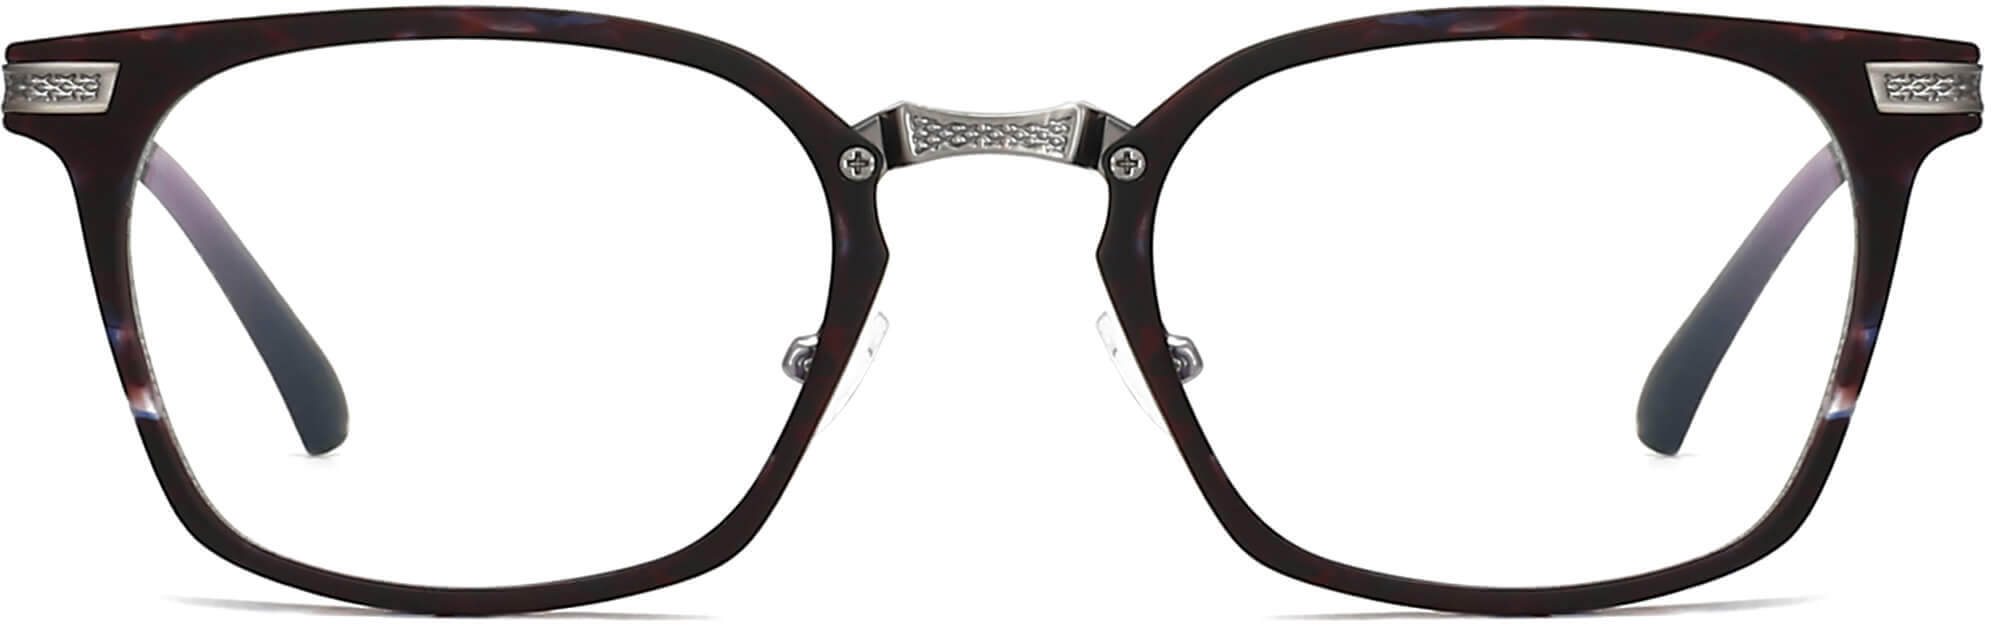 Doir Rectangle Tortoise Eyeglasses from ANRRI, front view